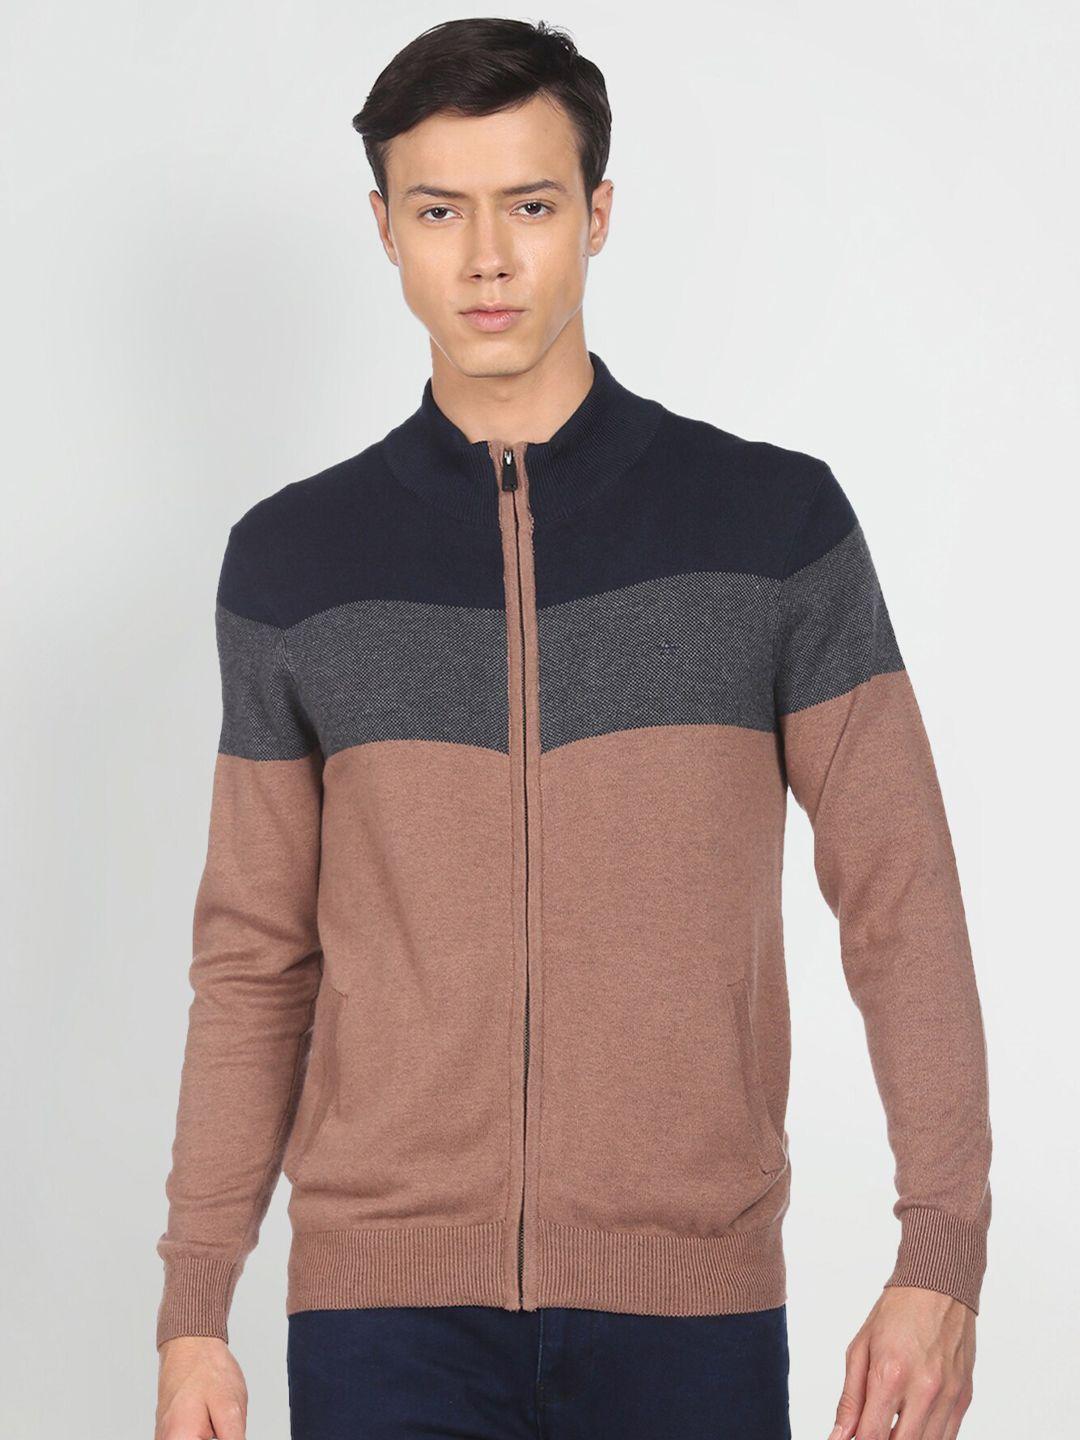 arrow-colourblocked-mock-collar-long-sleeves-cardigan-sweater